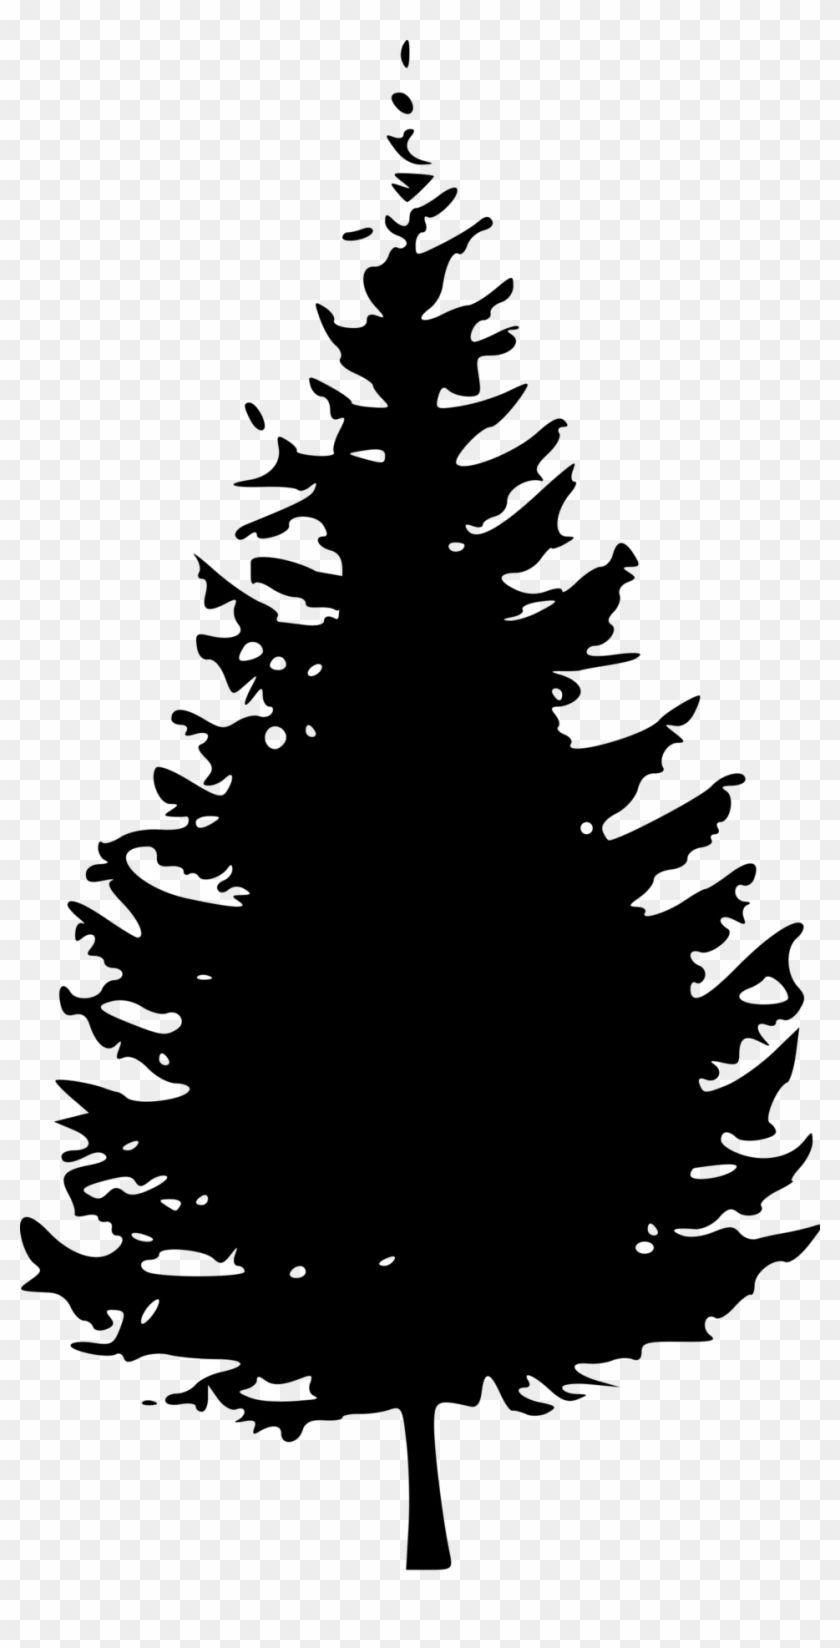 Black and White Pine Tree Logo - Transparent Tree Cliparts 18, - Pine Tree Clip Art Black And White ...